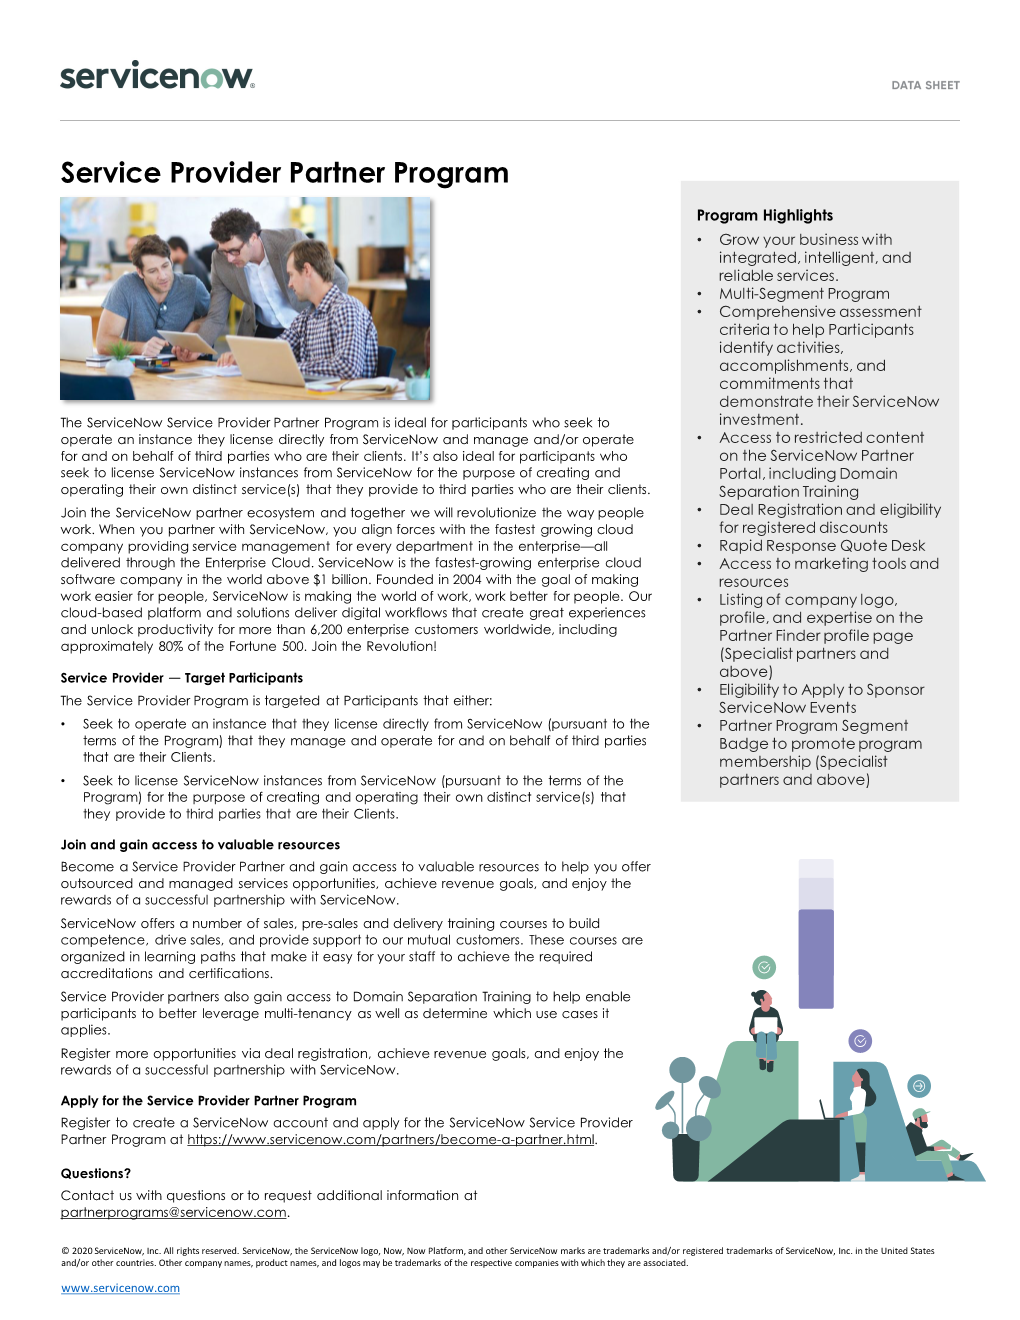 Service Provider Partner Program